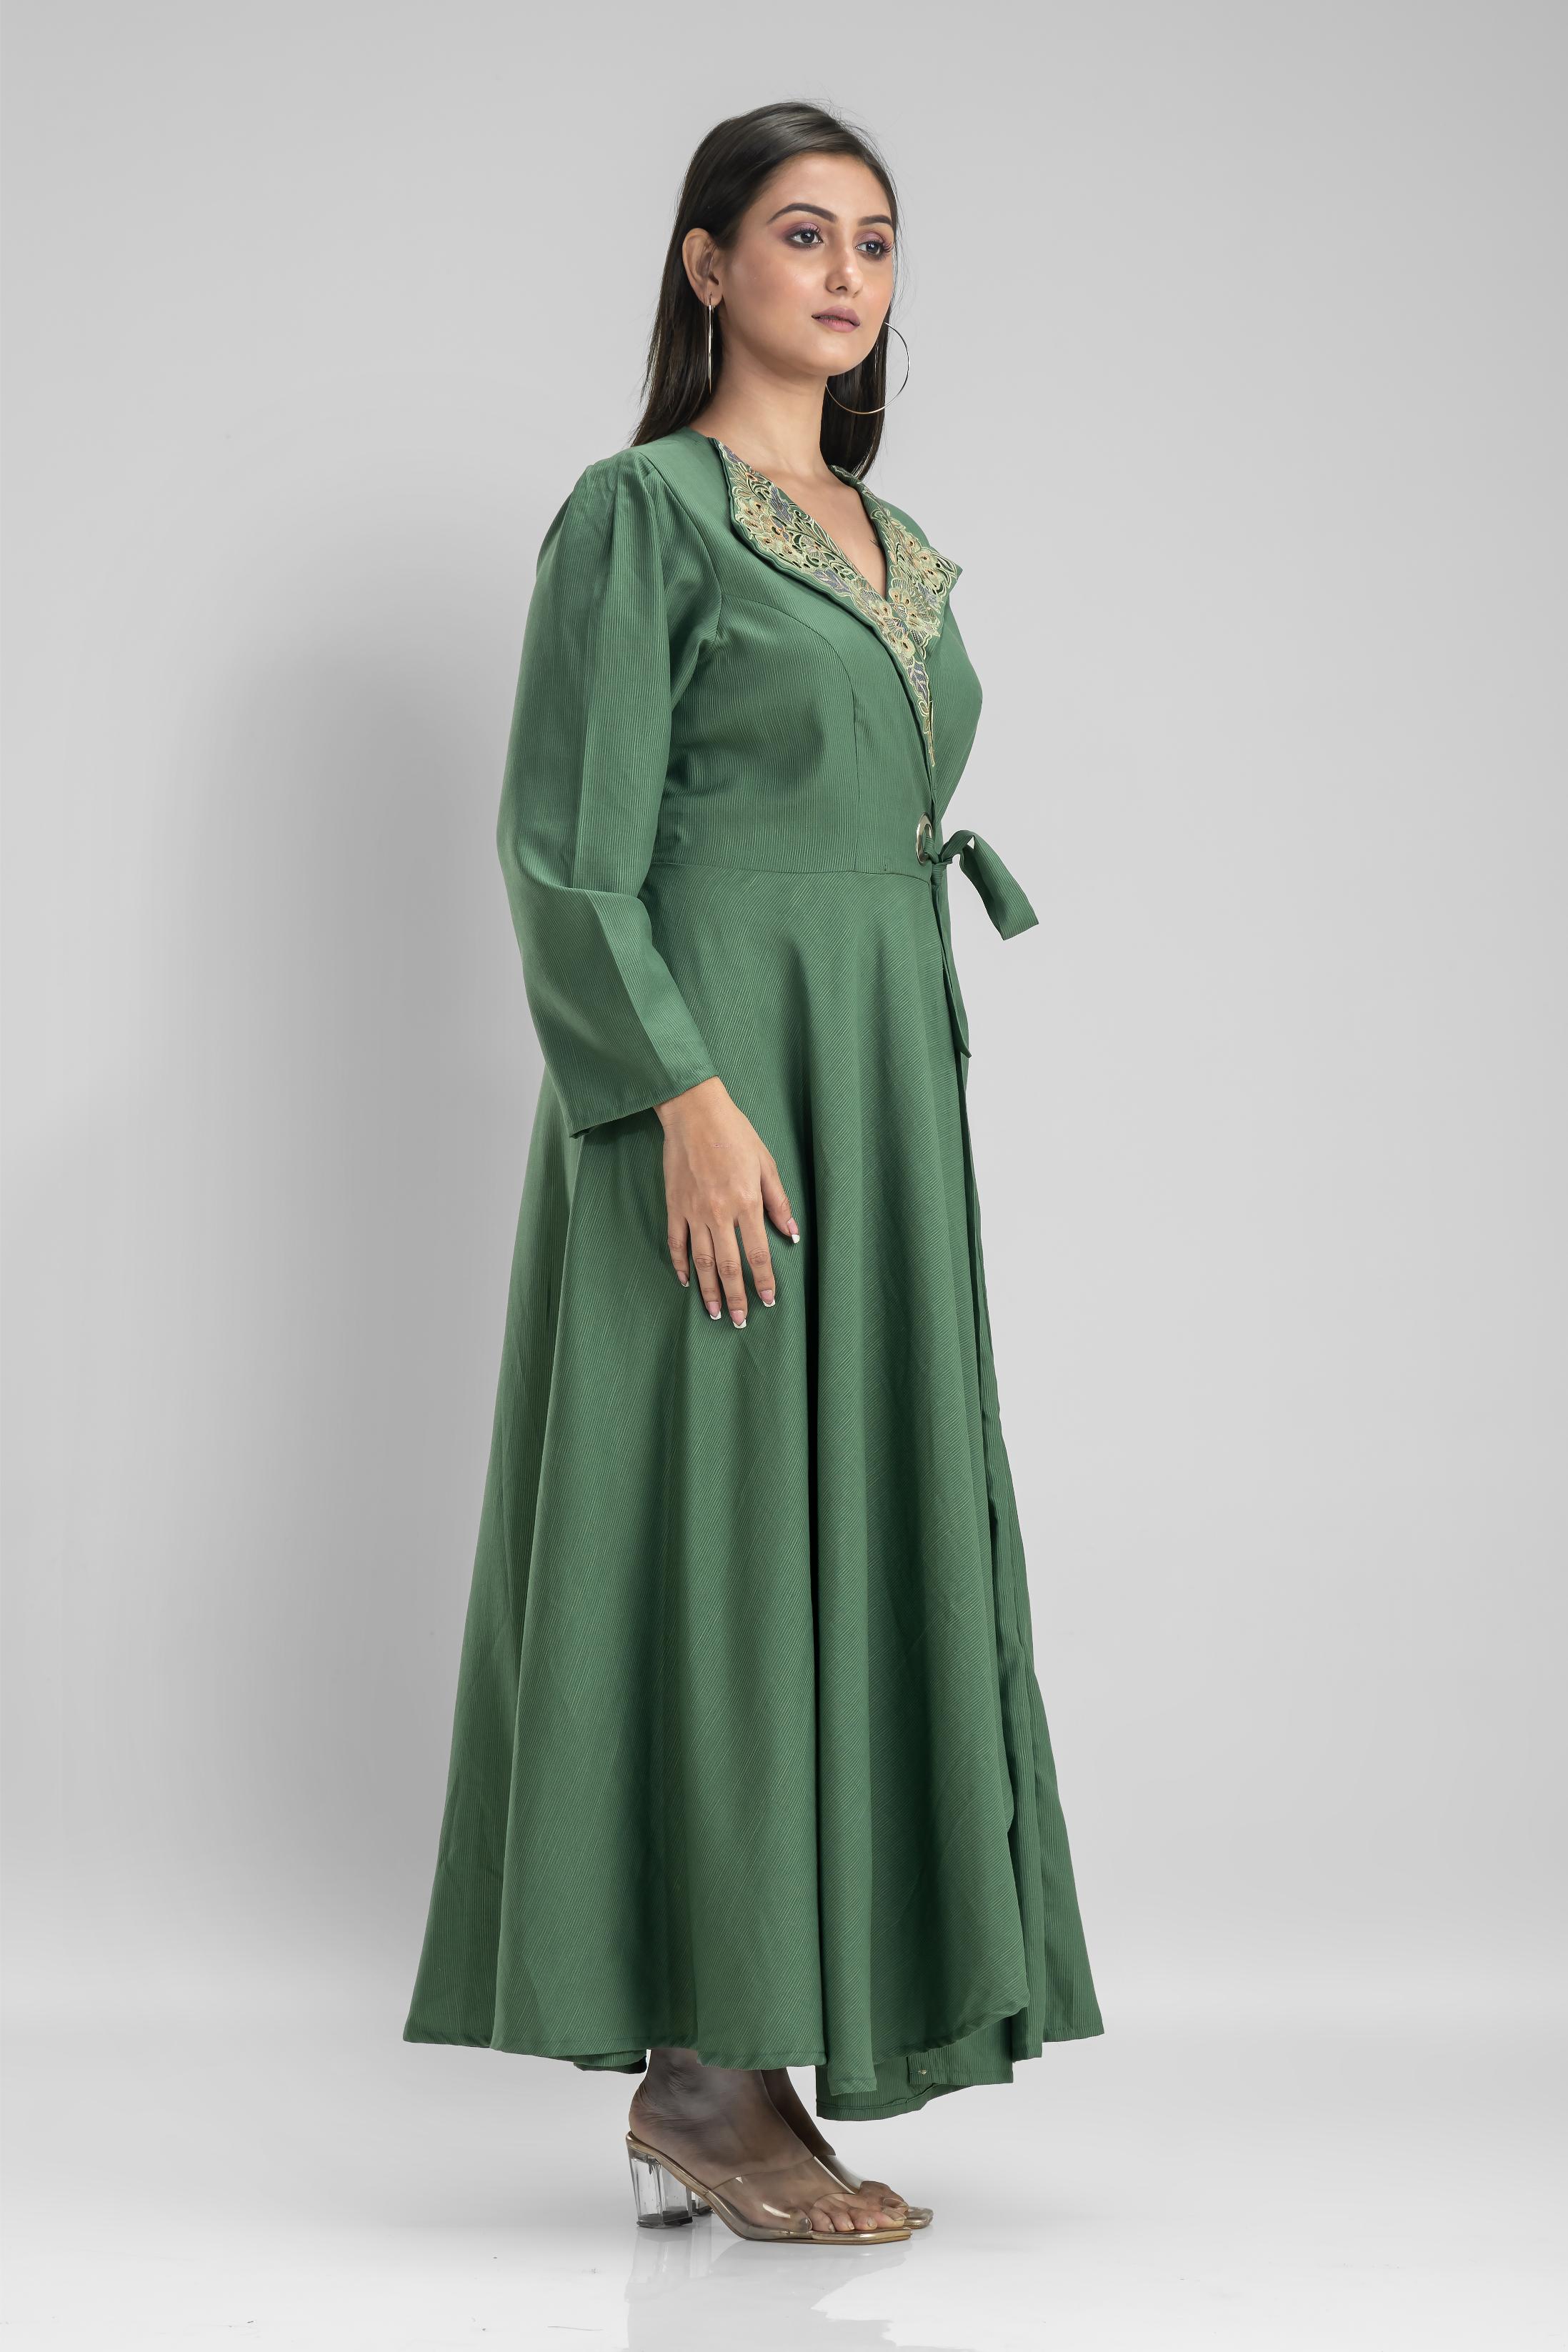 Fern Green Embellished Belgium Silk Draped Dress